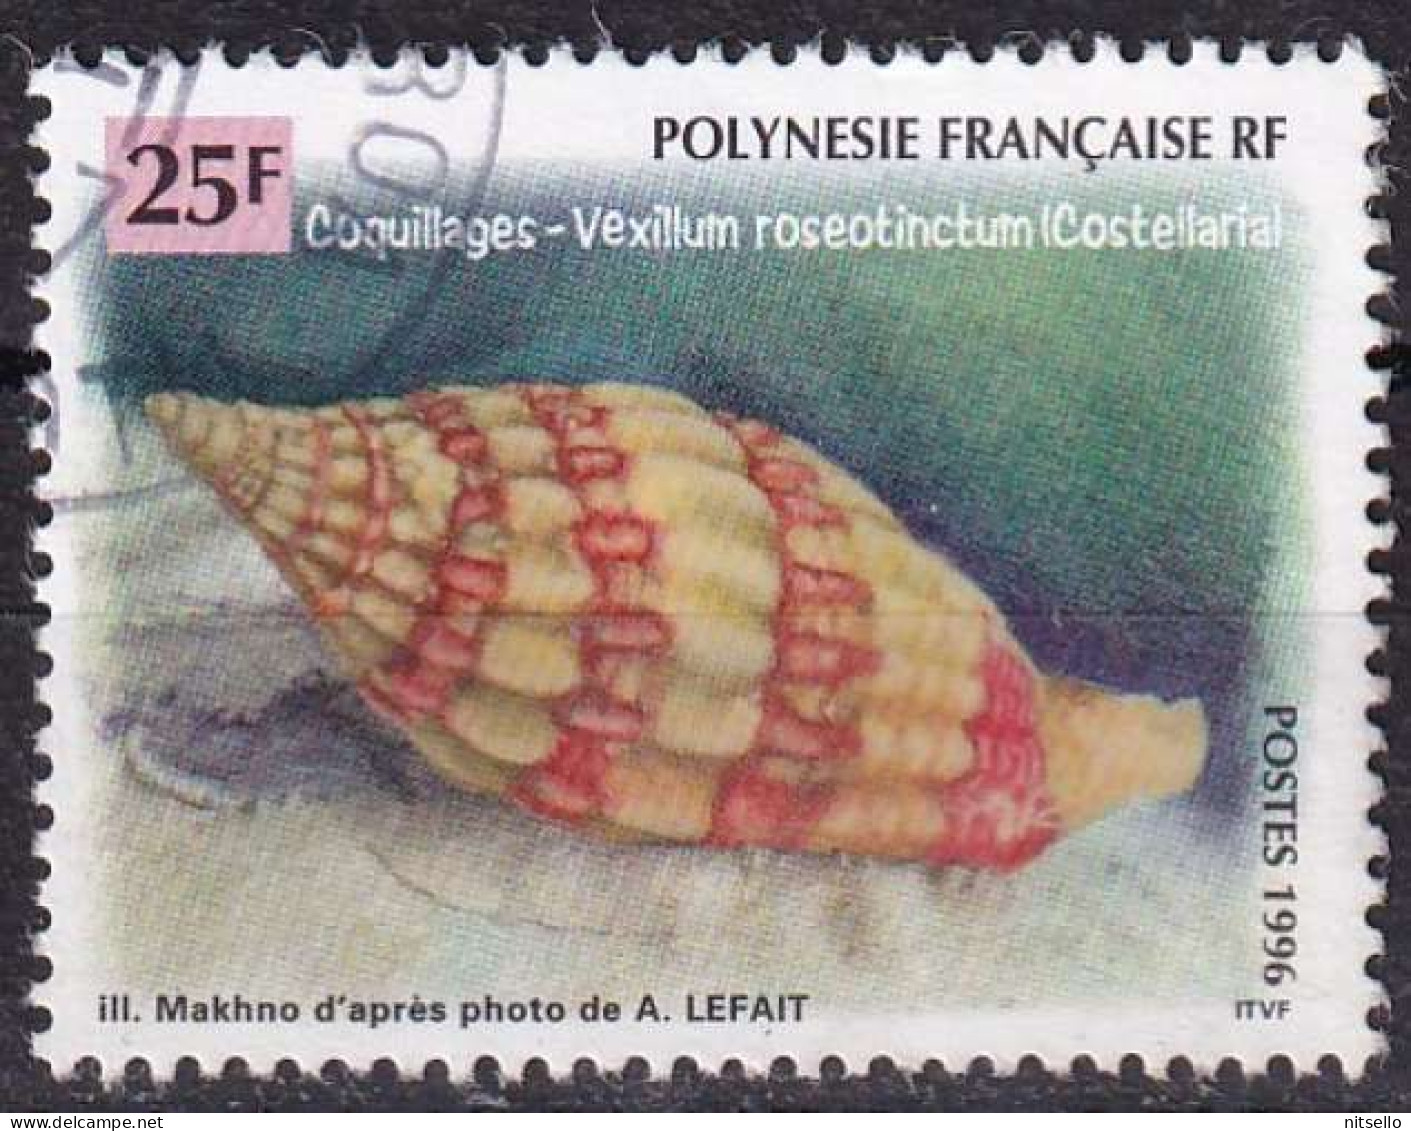 LOTE 2202A ///  (C020)  POLINESIA FRANCESA  - YVERT Nº: 505  ¡¡¡ OFERTA - LIQUIDATION - JE LIQUIDE !!! - Used Stamps